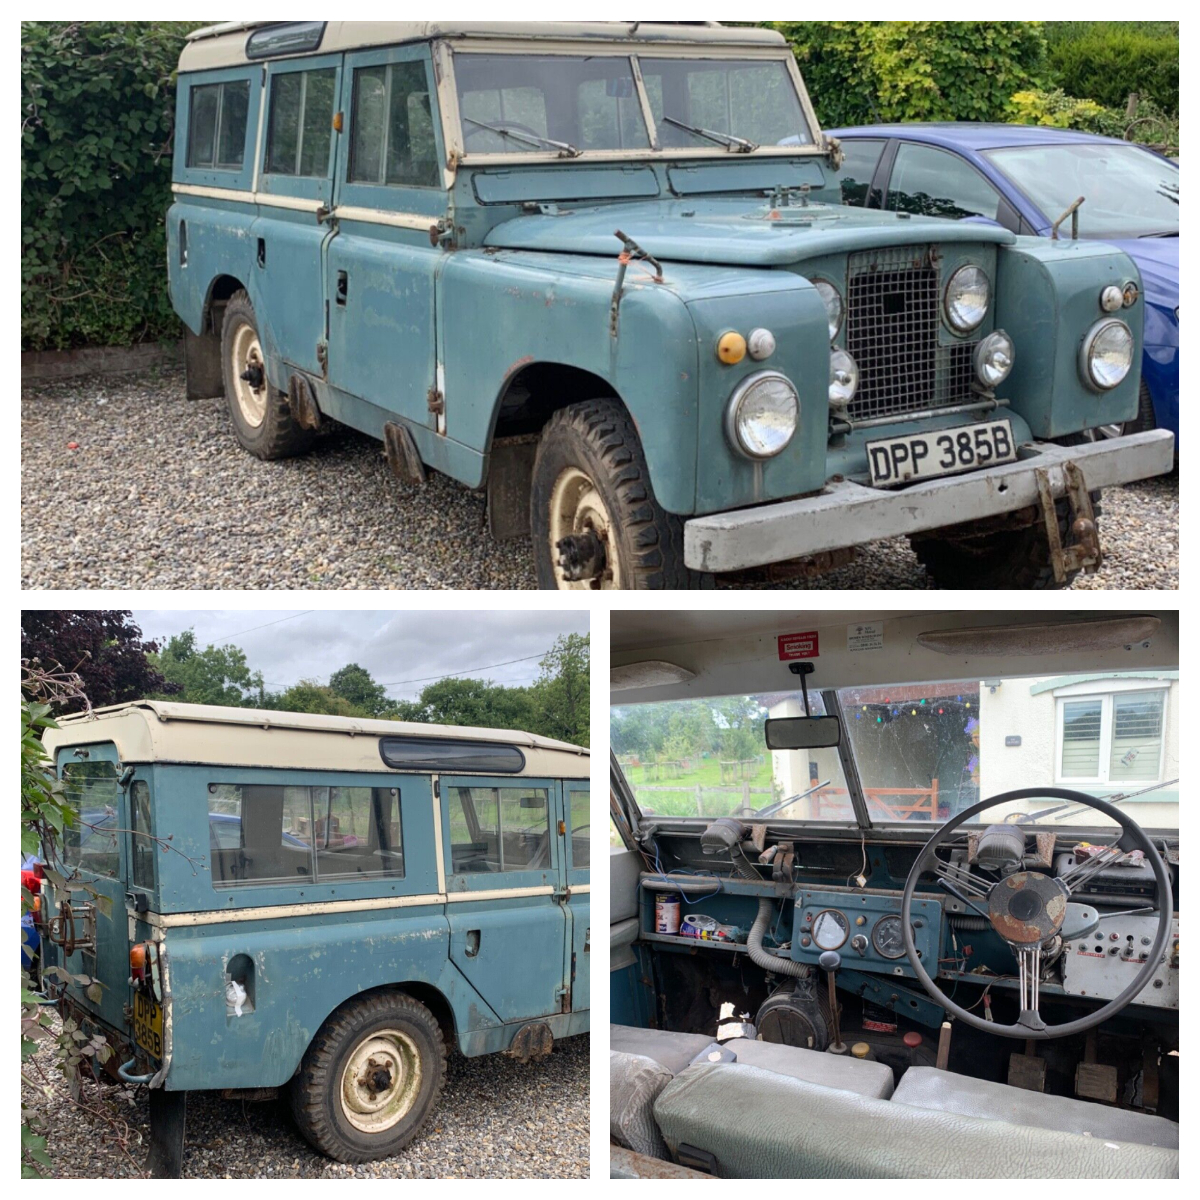 Land Rover Series 2A Safari Project
More info --> ow.ly/IKwo50PTfyi

 #LandRover #Series2A #SafariProject #OffRoad #Restoration #LandRoverLife #ClassicCars #VintageCar #ProjectCar